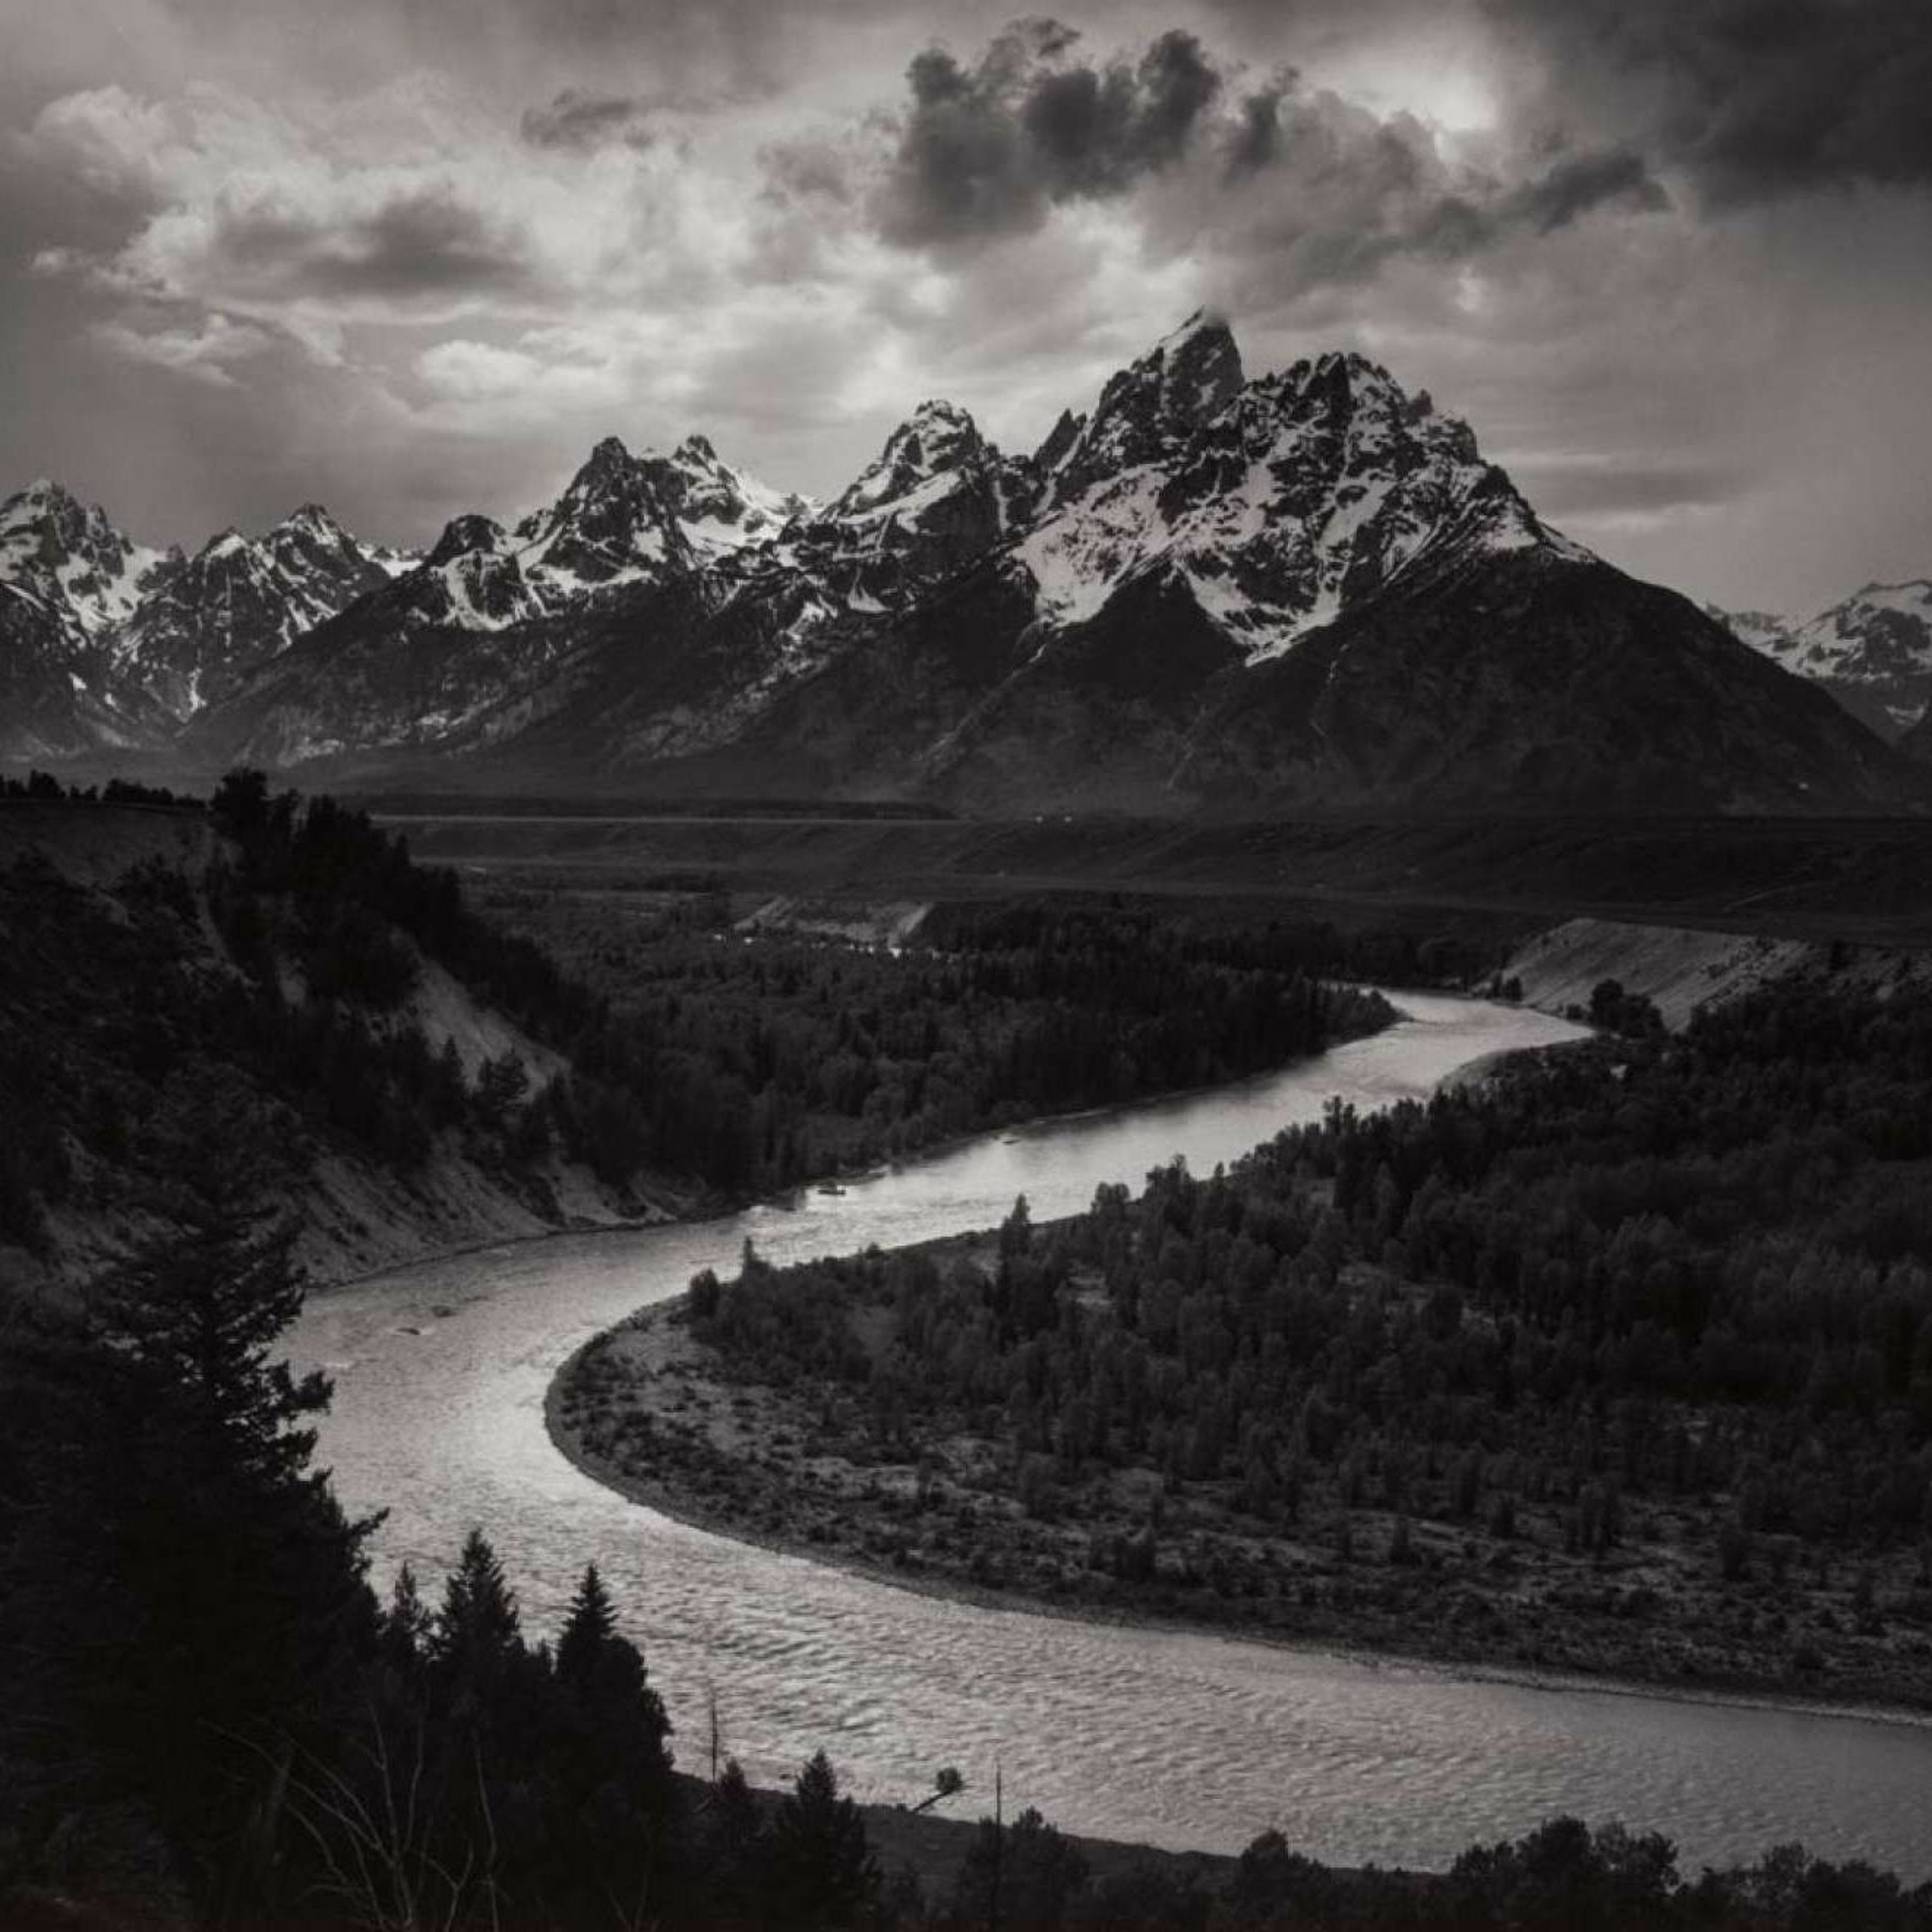 Ep. 37 - Ansel Adams' "The Tetons and Snake River, Grand Teton National Park, Wyoming" (1942)